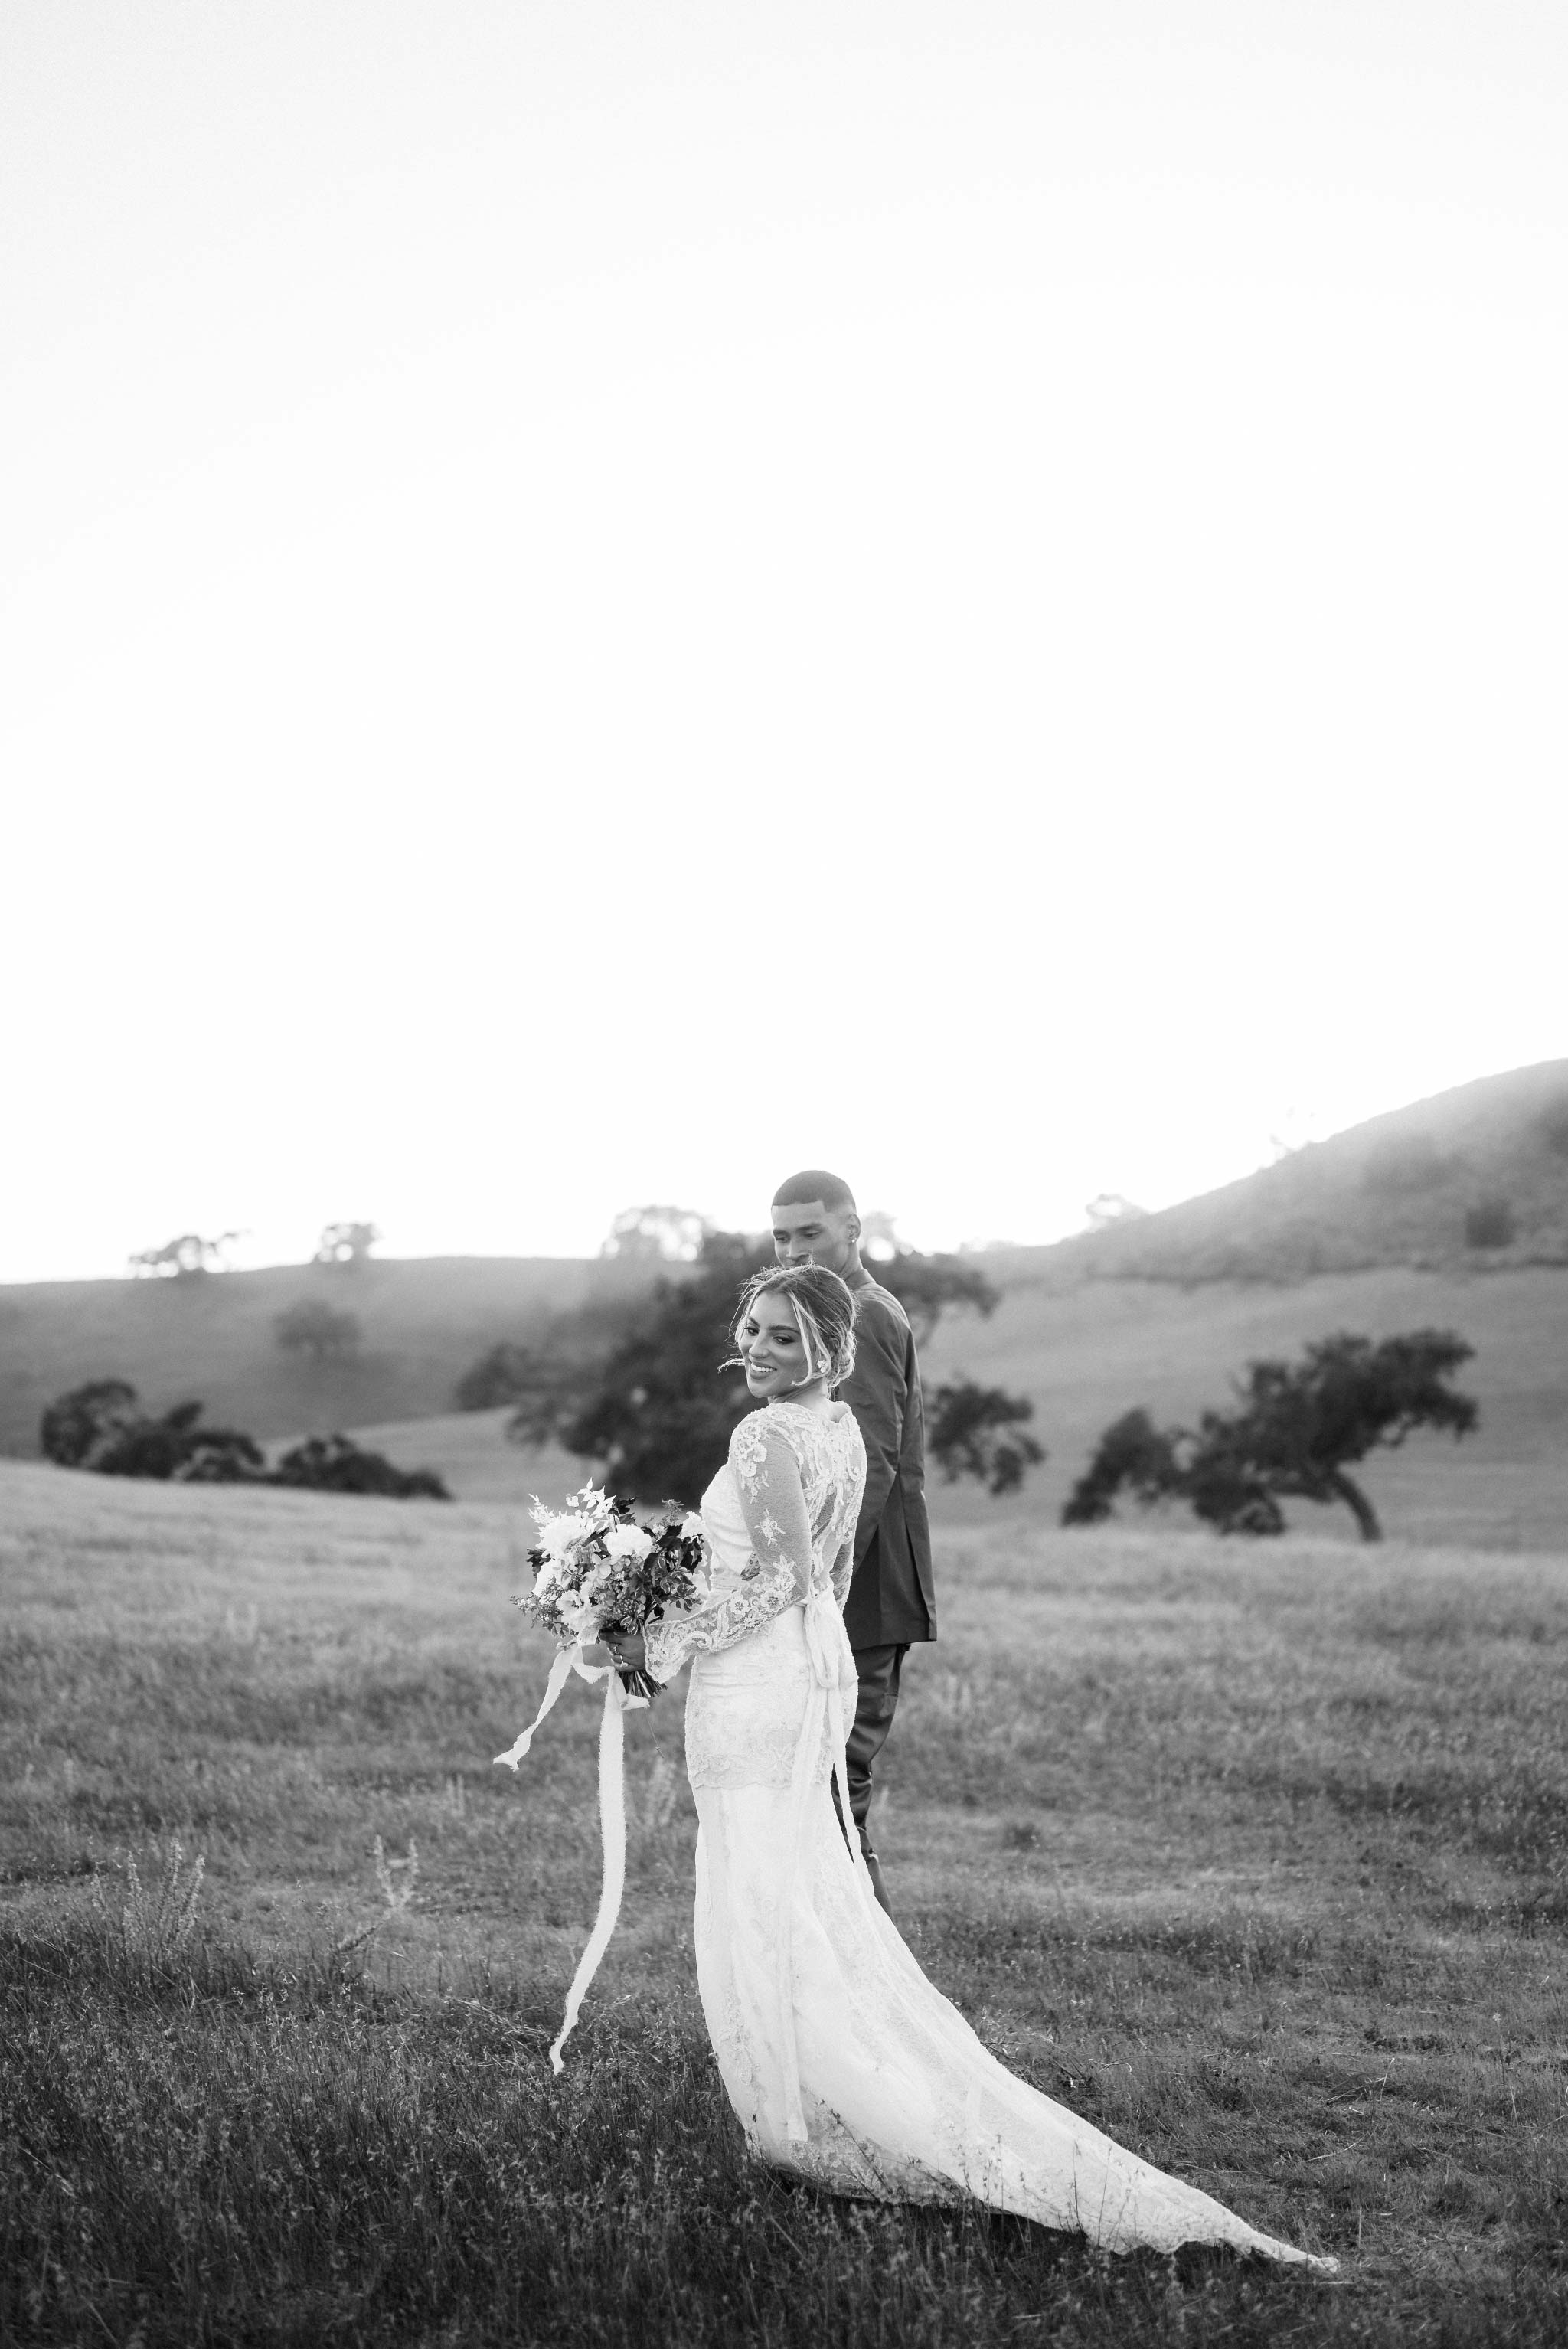 Bride and Groom at Kestrel Park Garden walking in open field